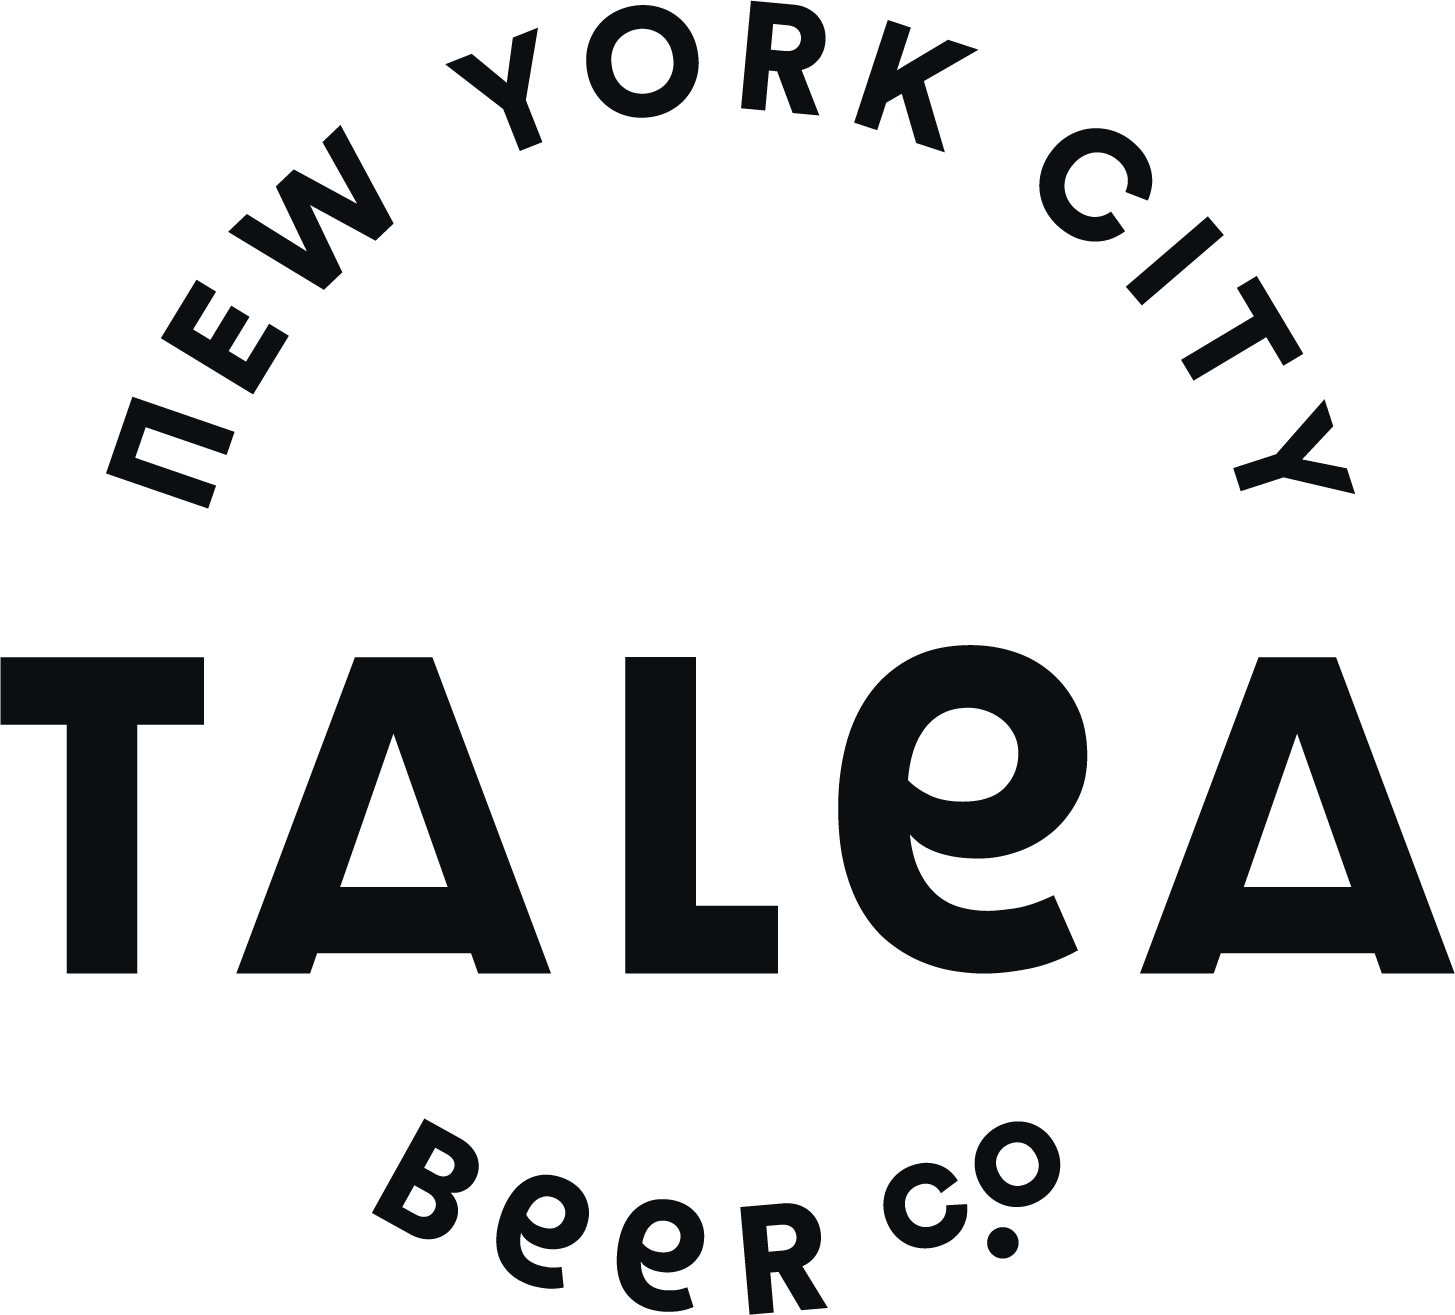 Talea Beer Home